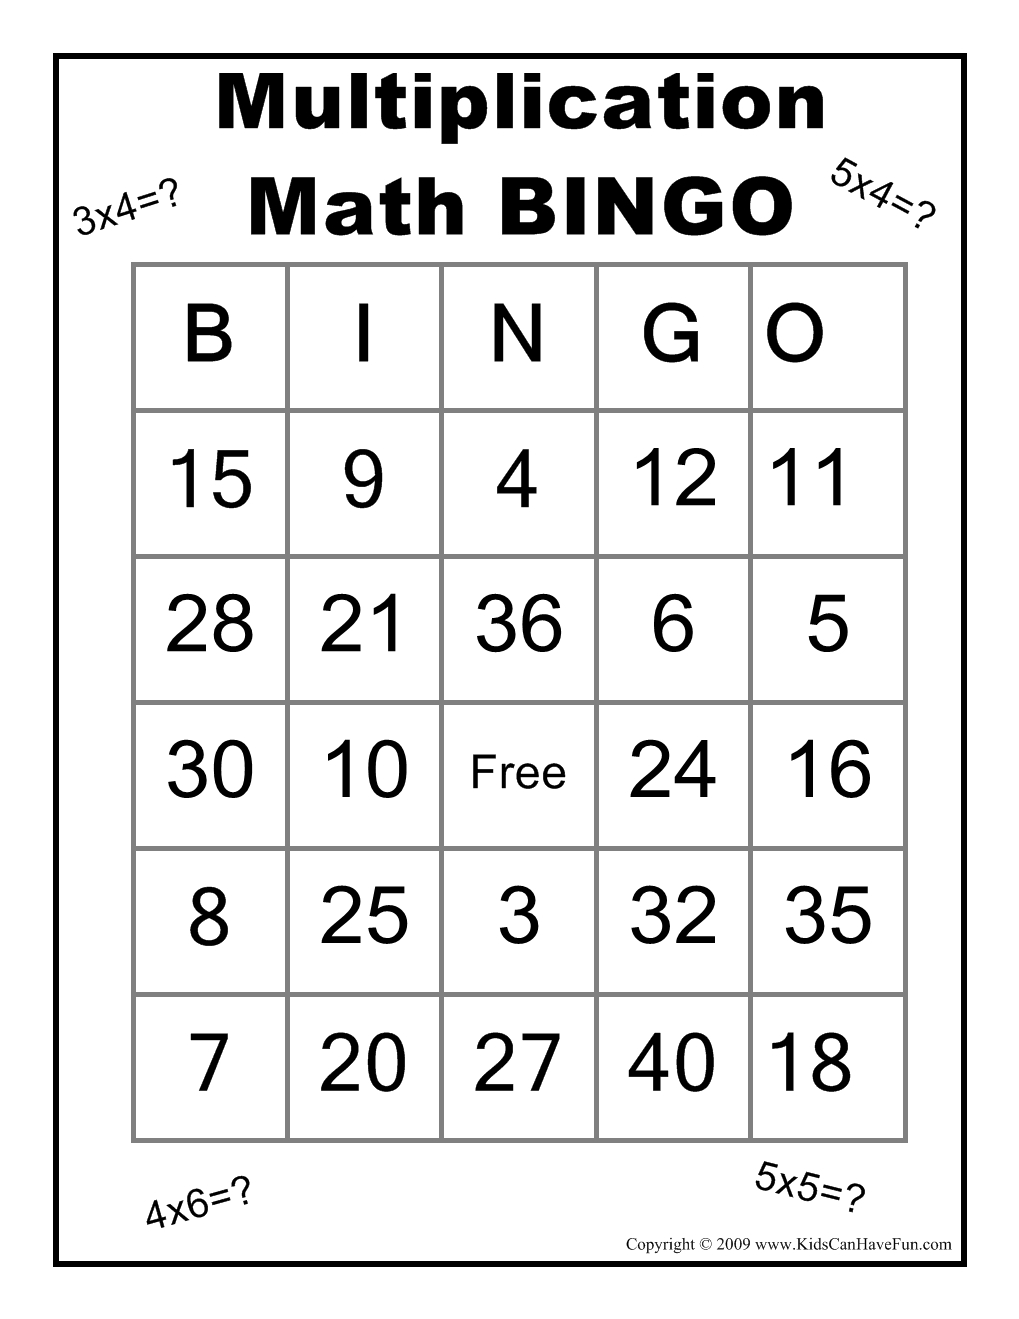 Multiplication Math Bingo Game | Math Bingo, Math, Fun Math with regard to Printable Multiplication Bingo Game